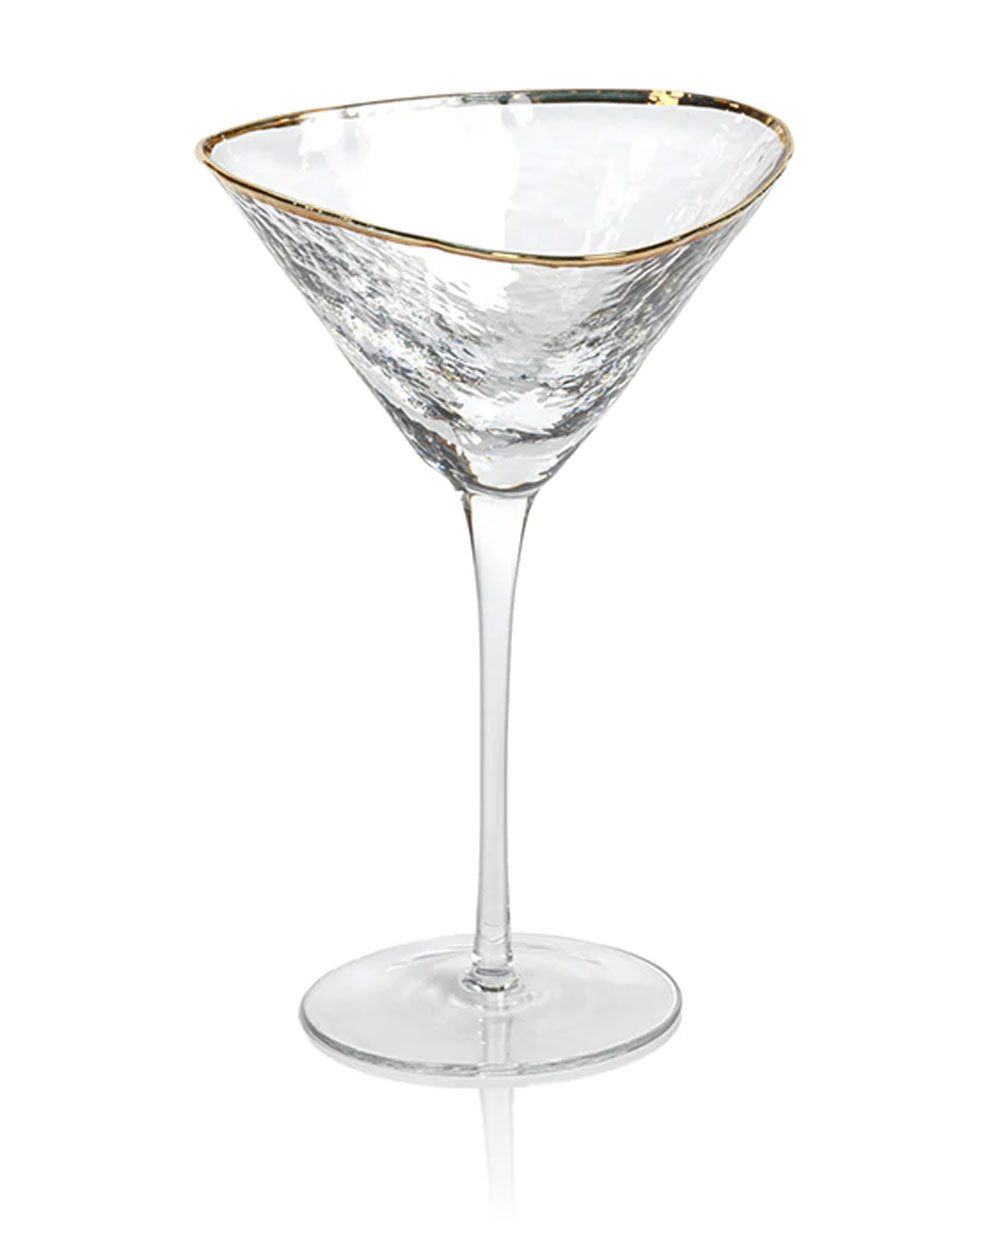 Apertivo Triangular Martini Glass with Gold Rim